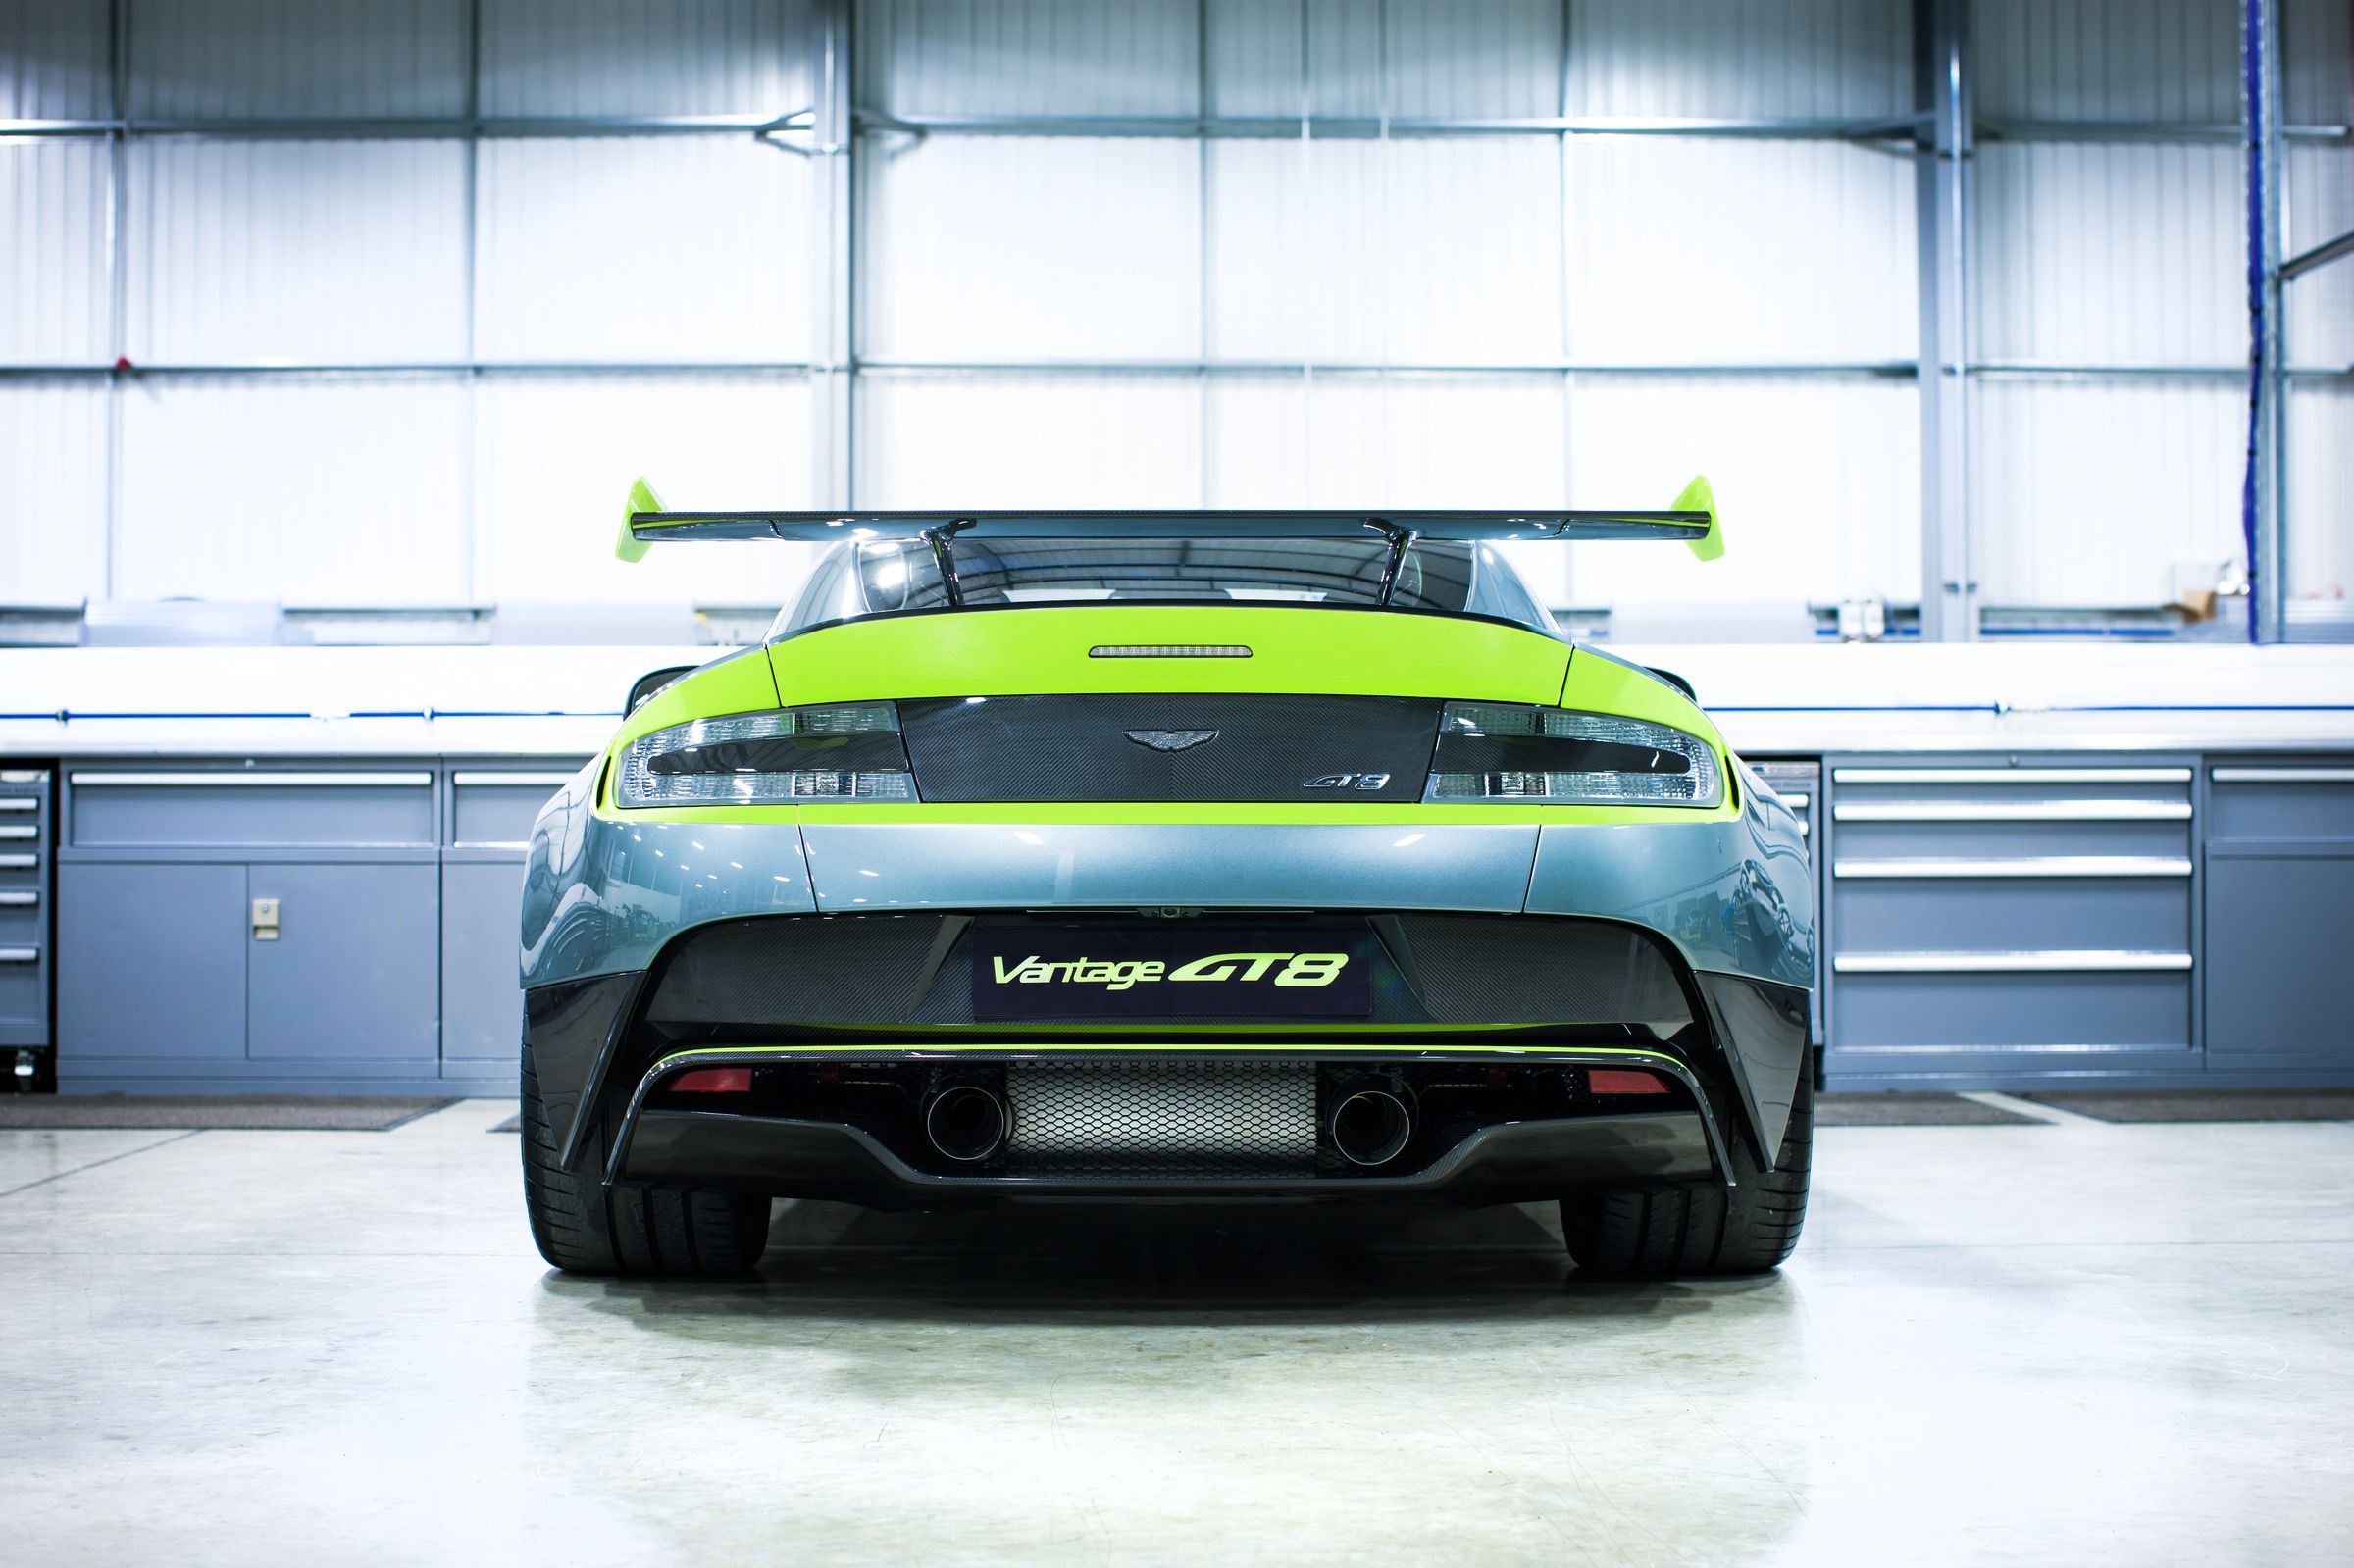 Aston Martin Vantage GT8 Gallery